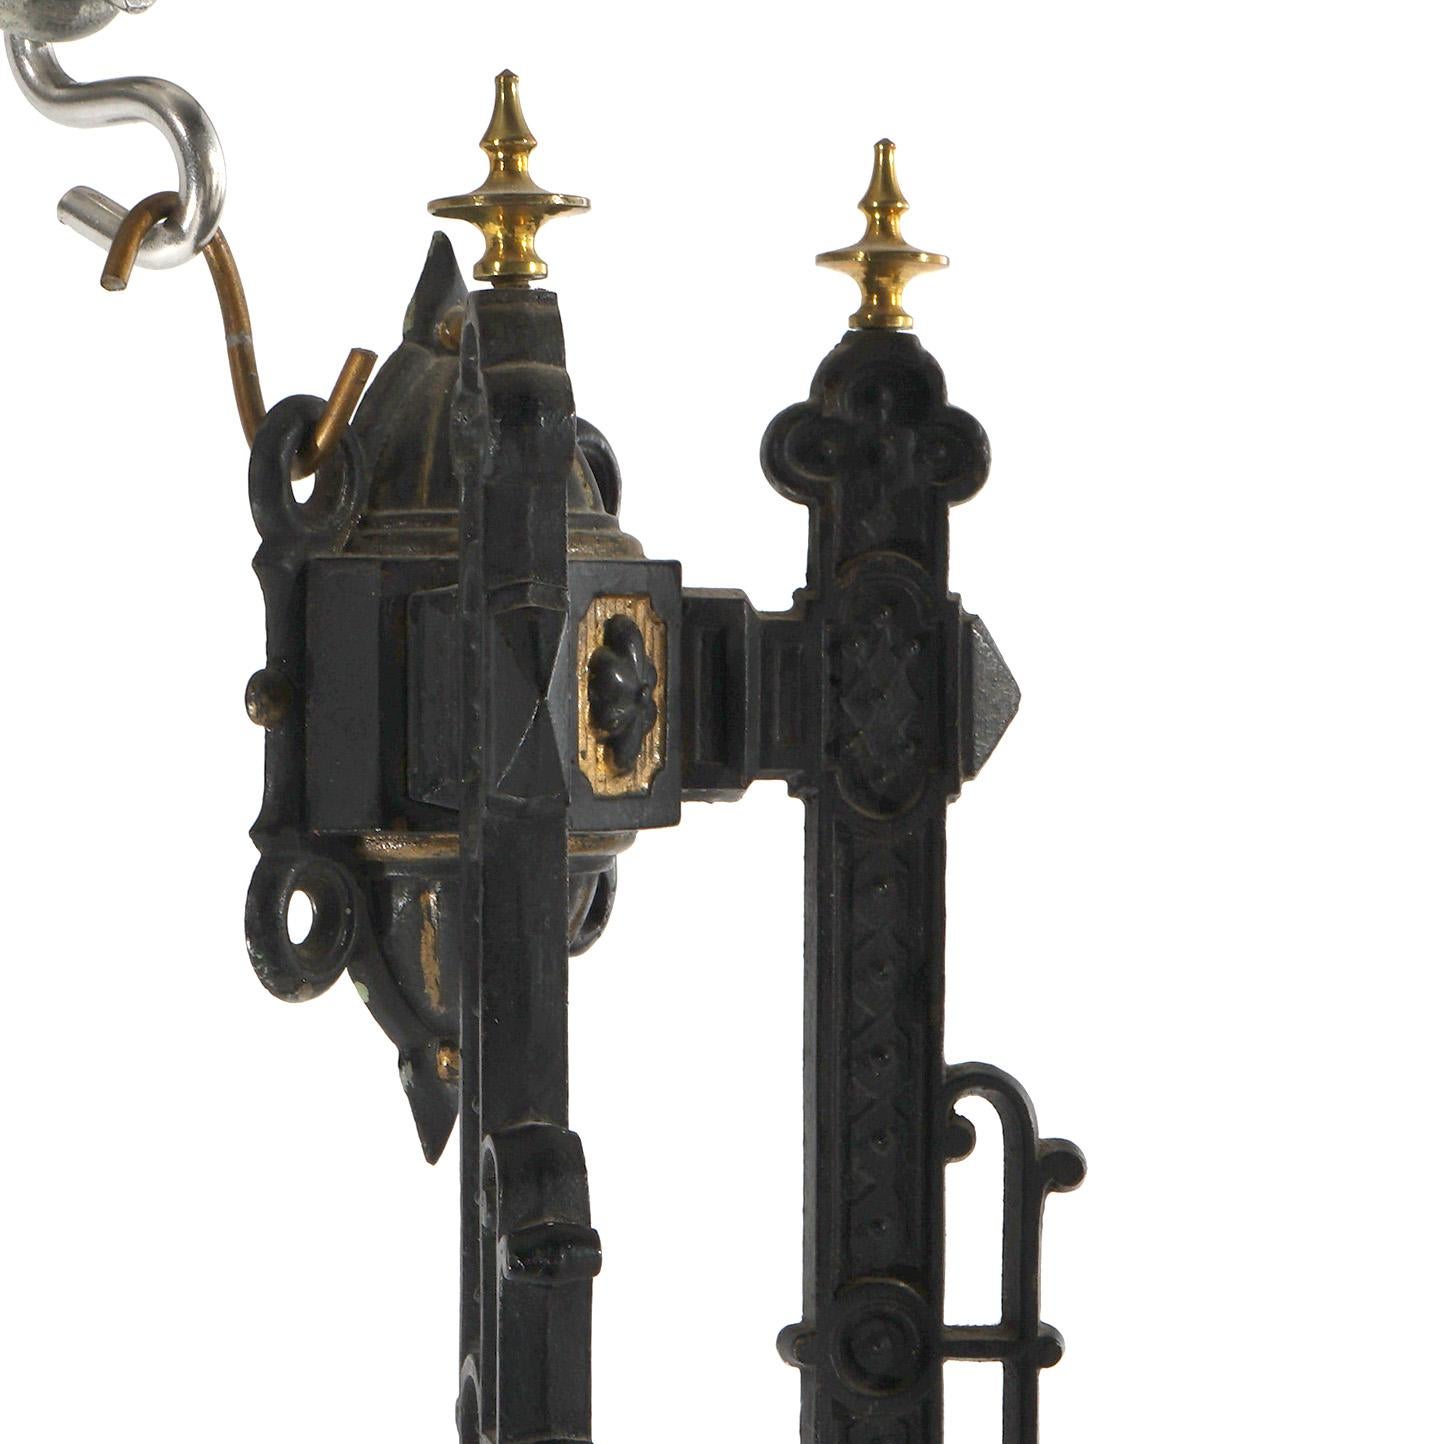 Antique Iron Horse Ebonized &Gilt Cast Iron Double Oil Lamp Wall Sconce C1860 2